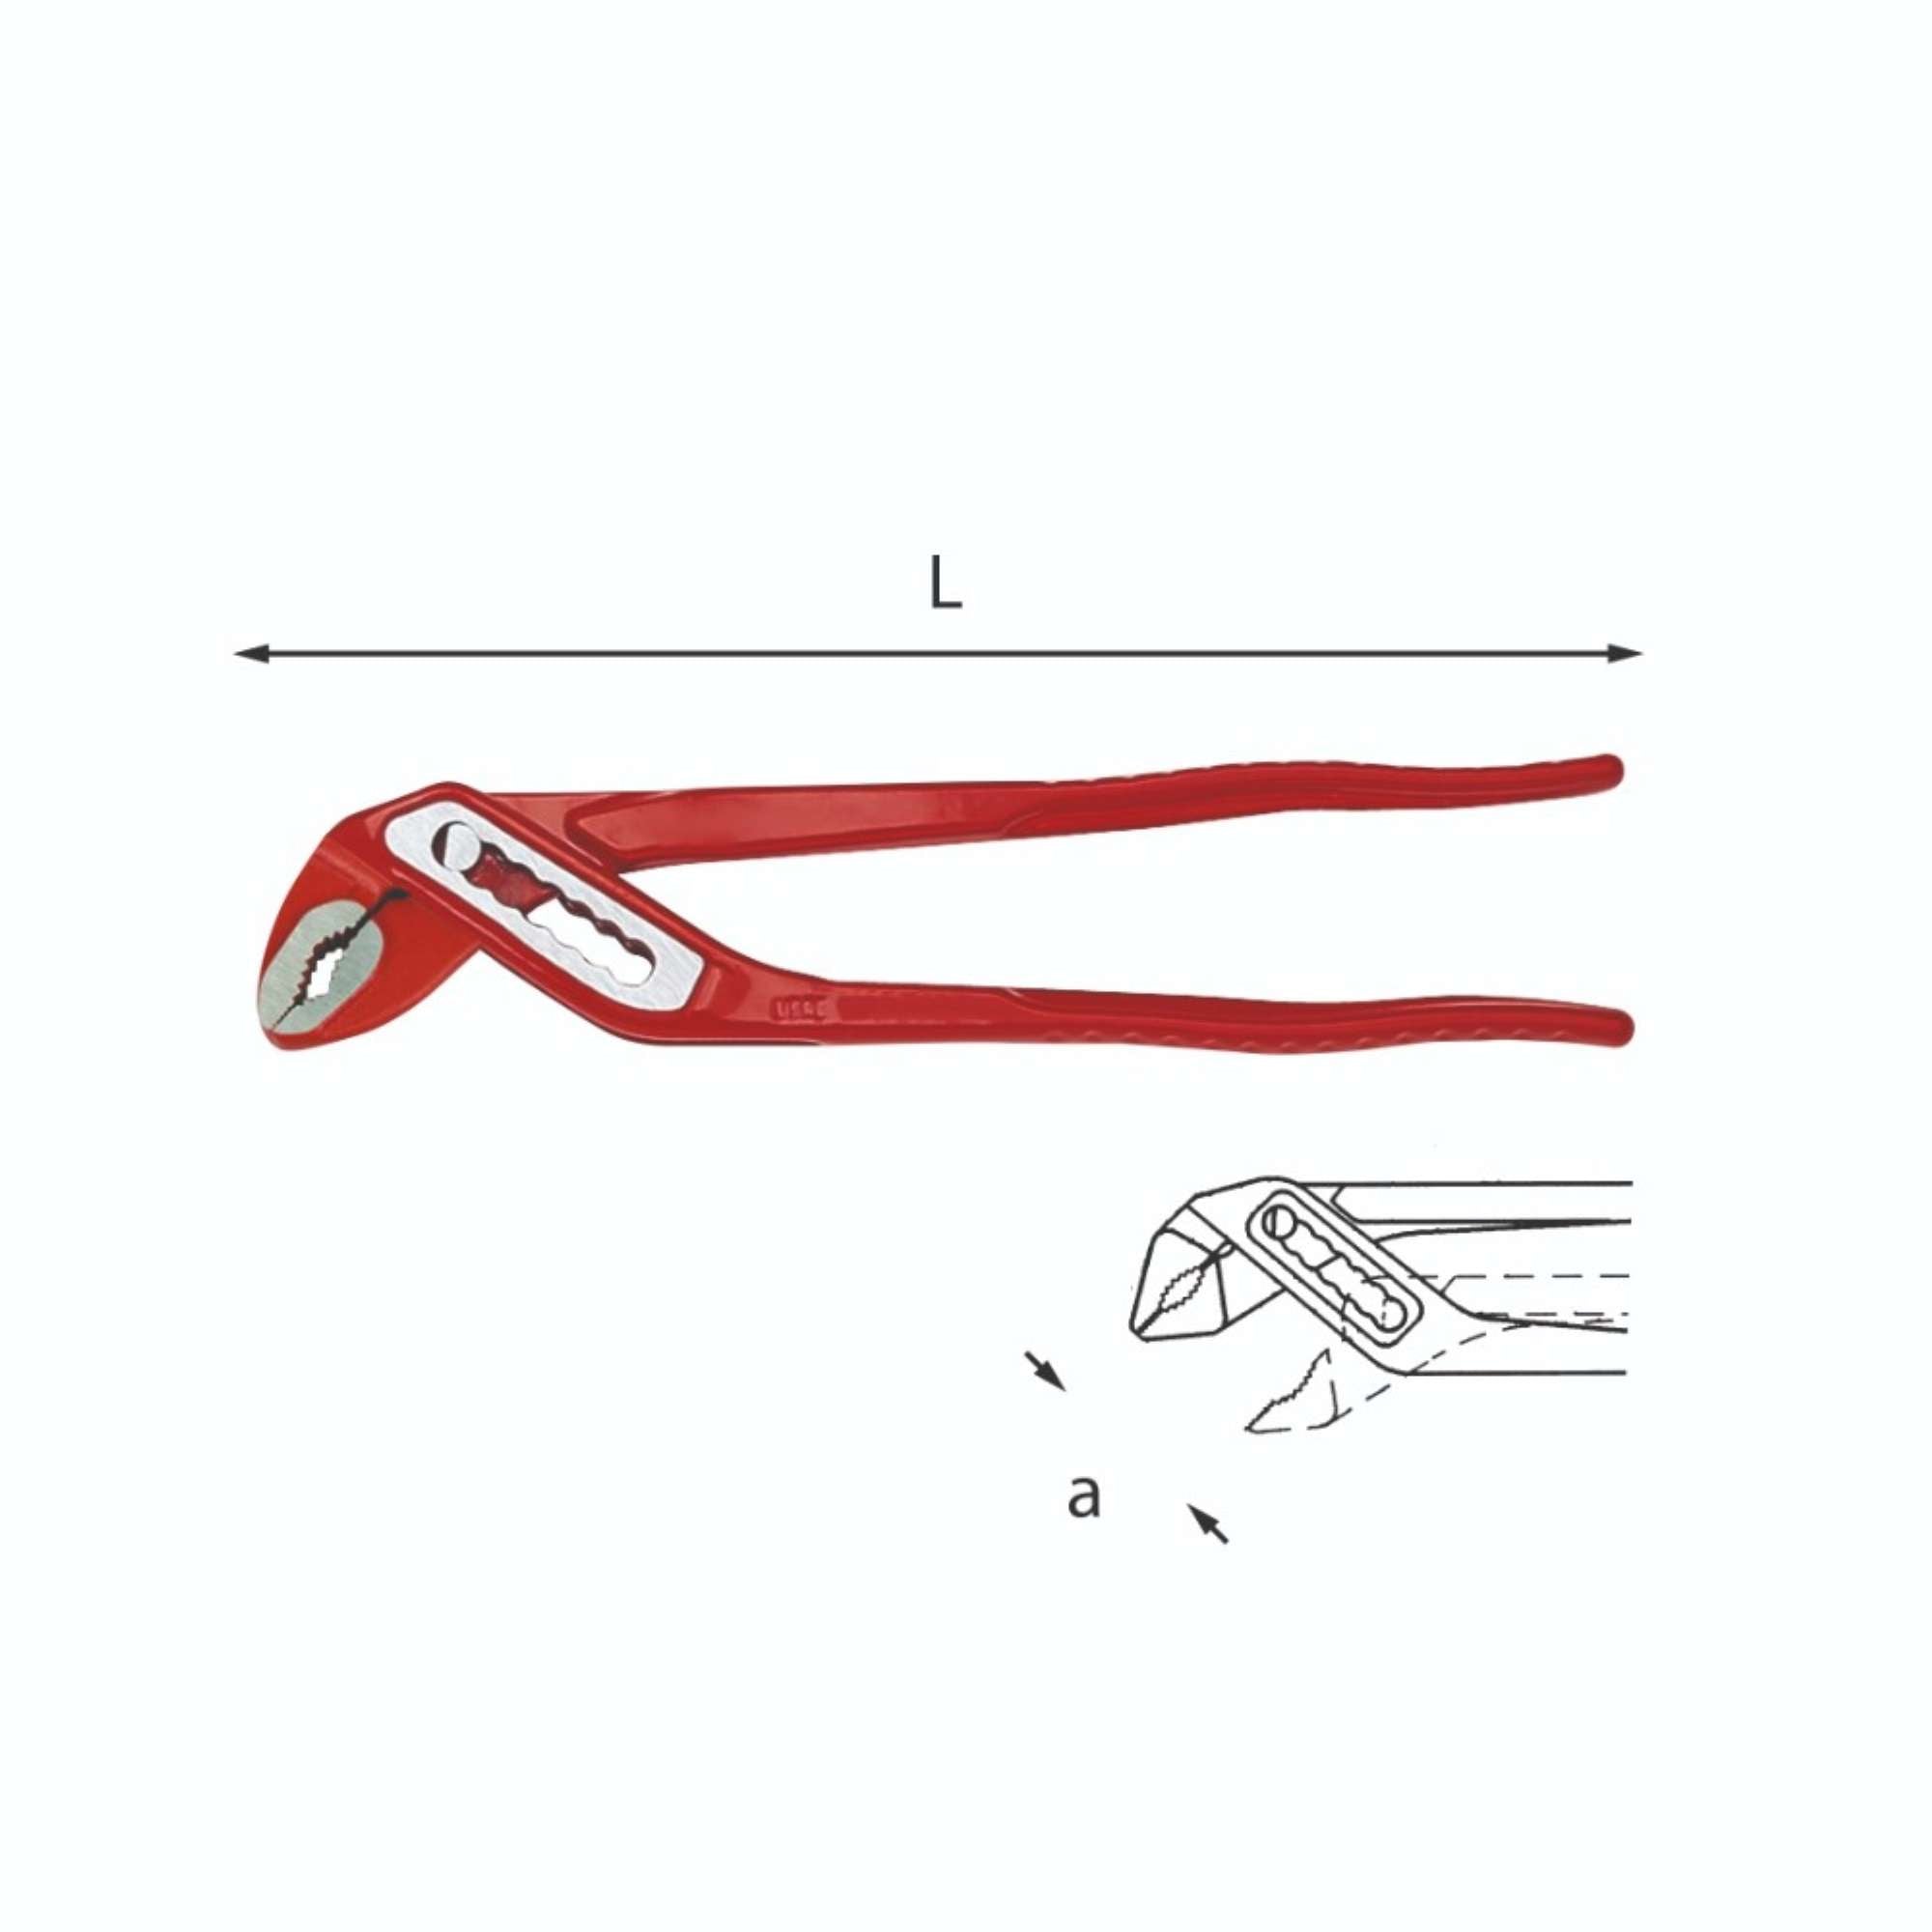 Adjustable pliers with closed hinge - Usag 180 V